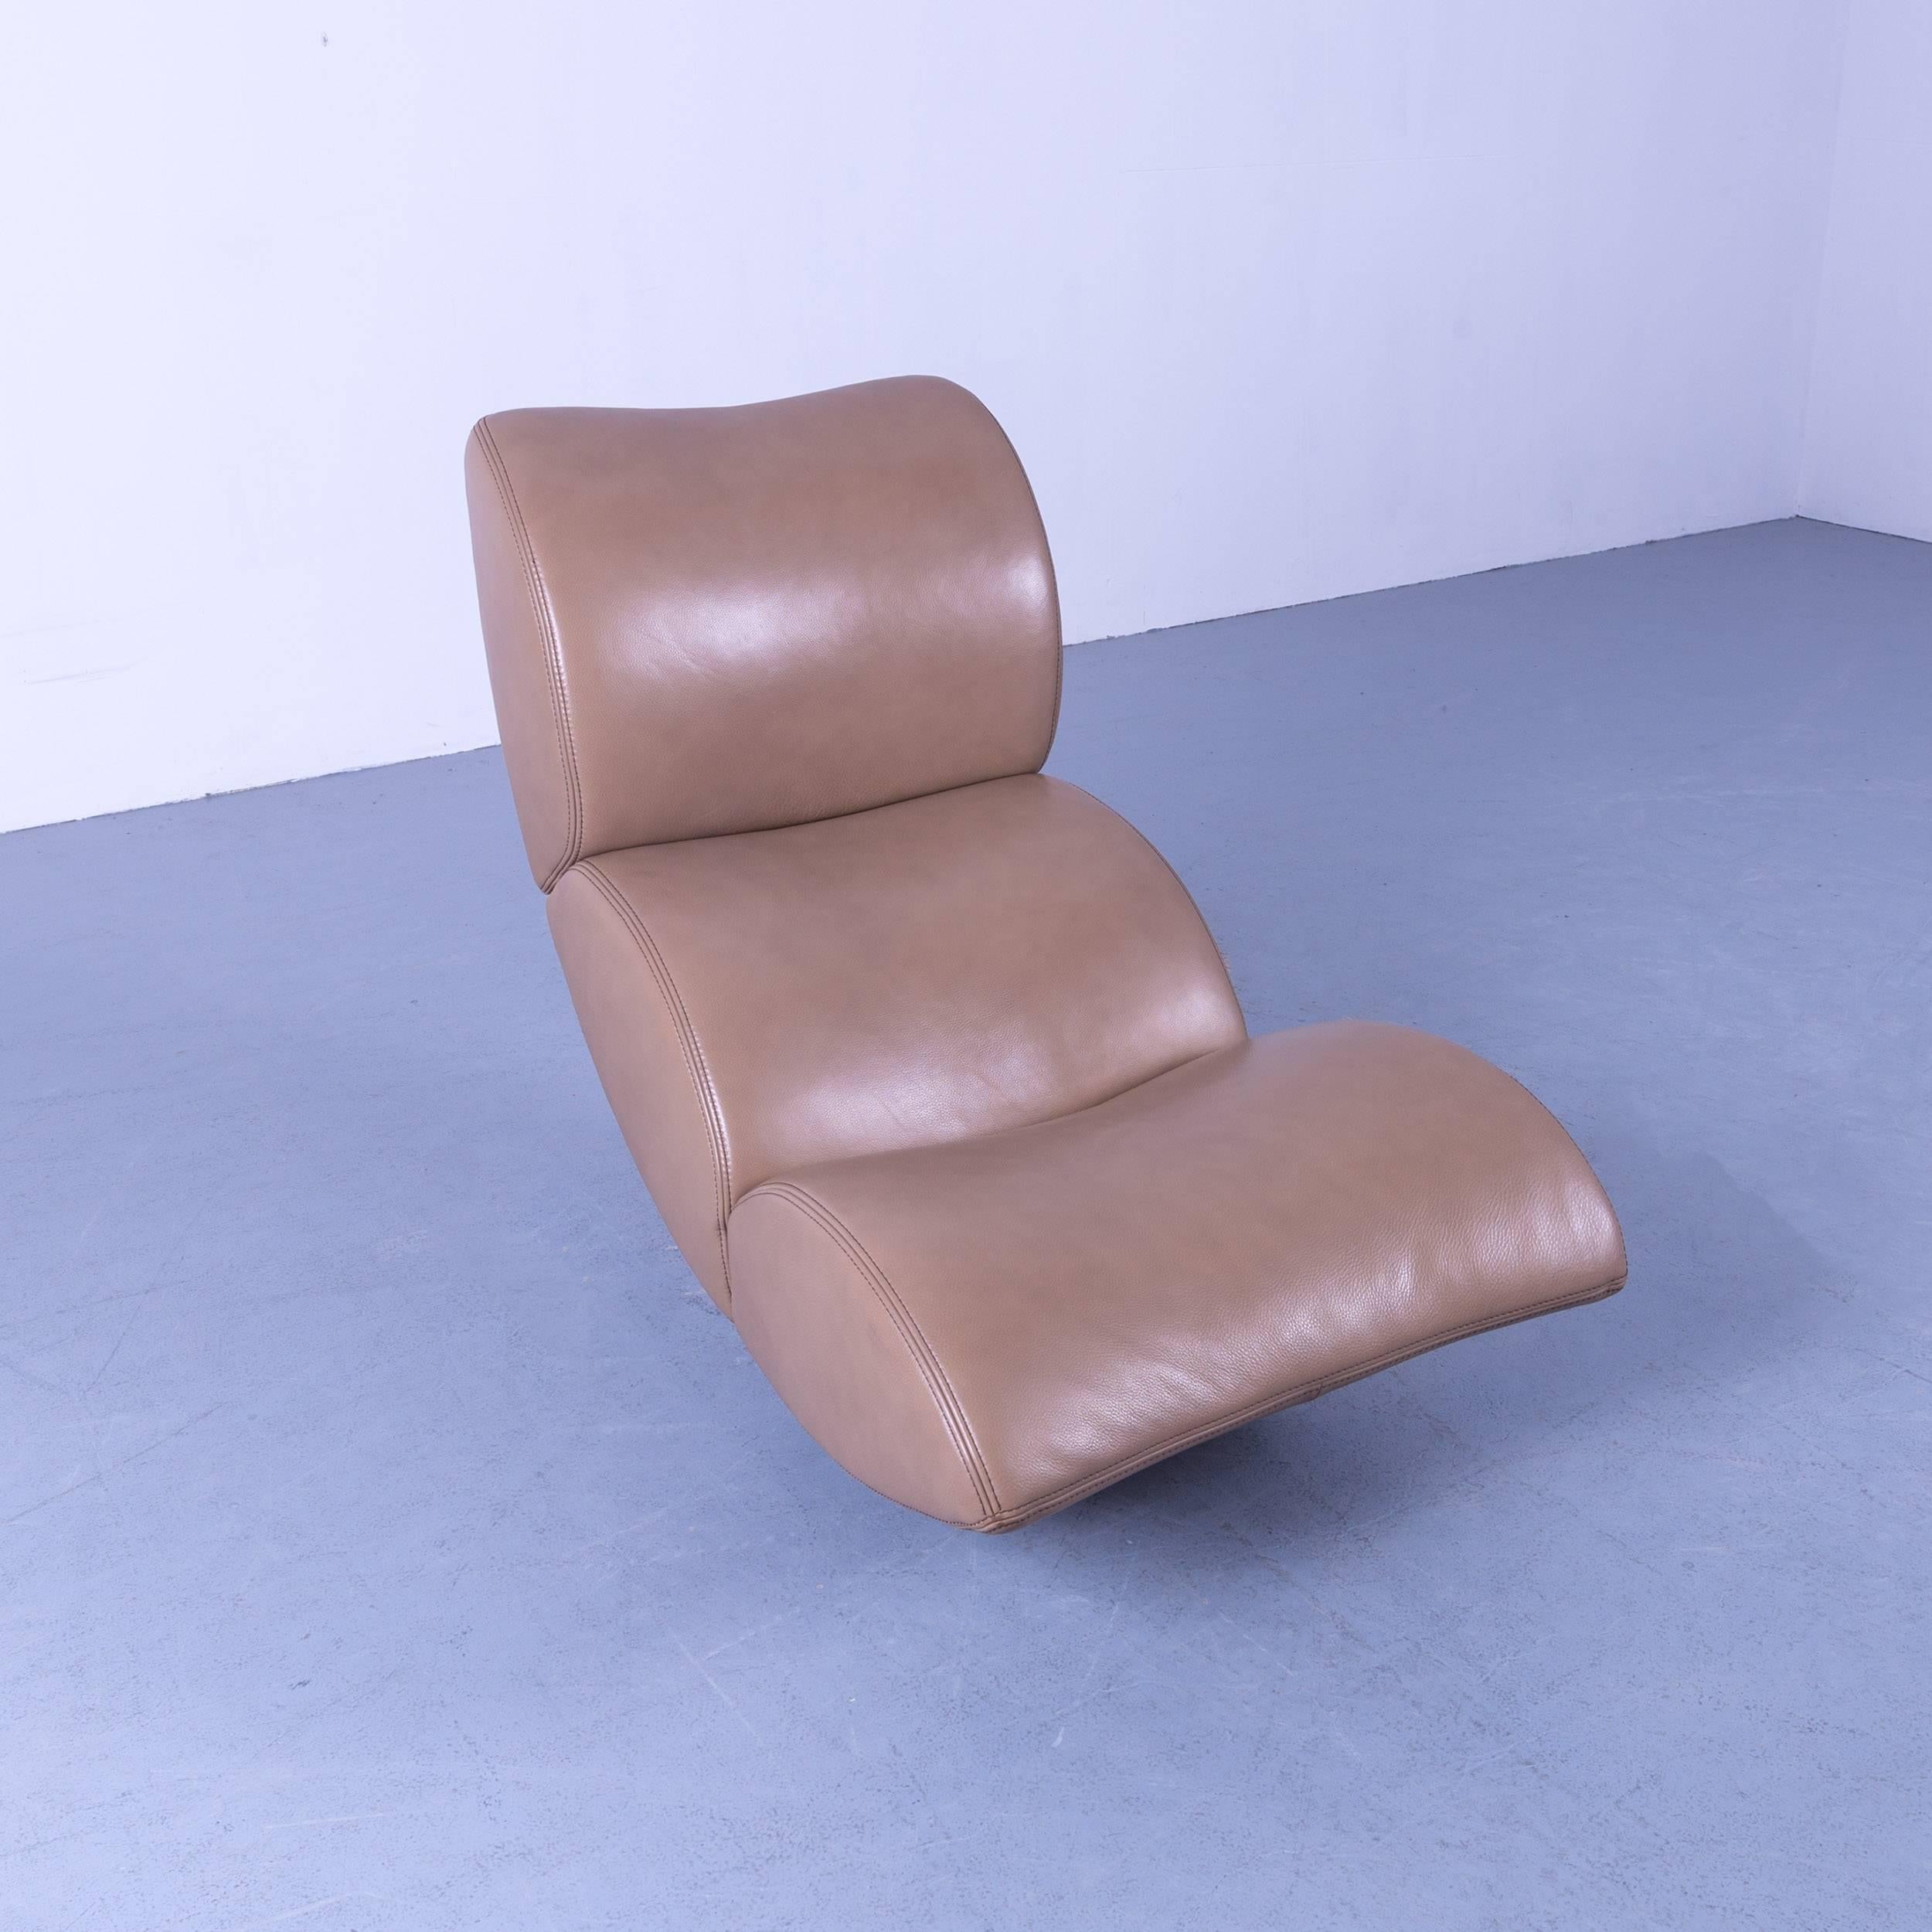 German Koinor Jetlag Designer Rocking Chair Beige Crème Leather One-Seat Metal Frame